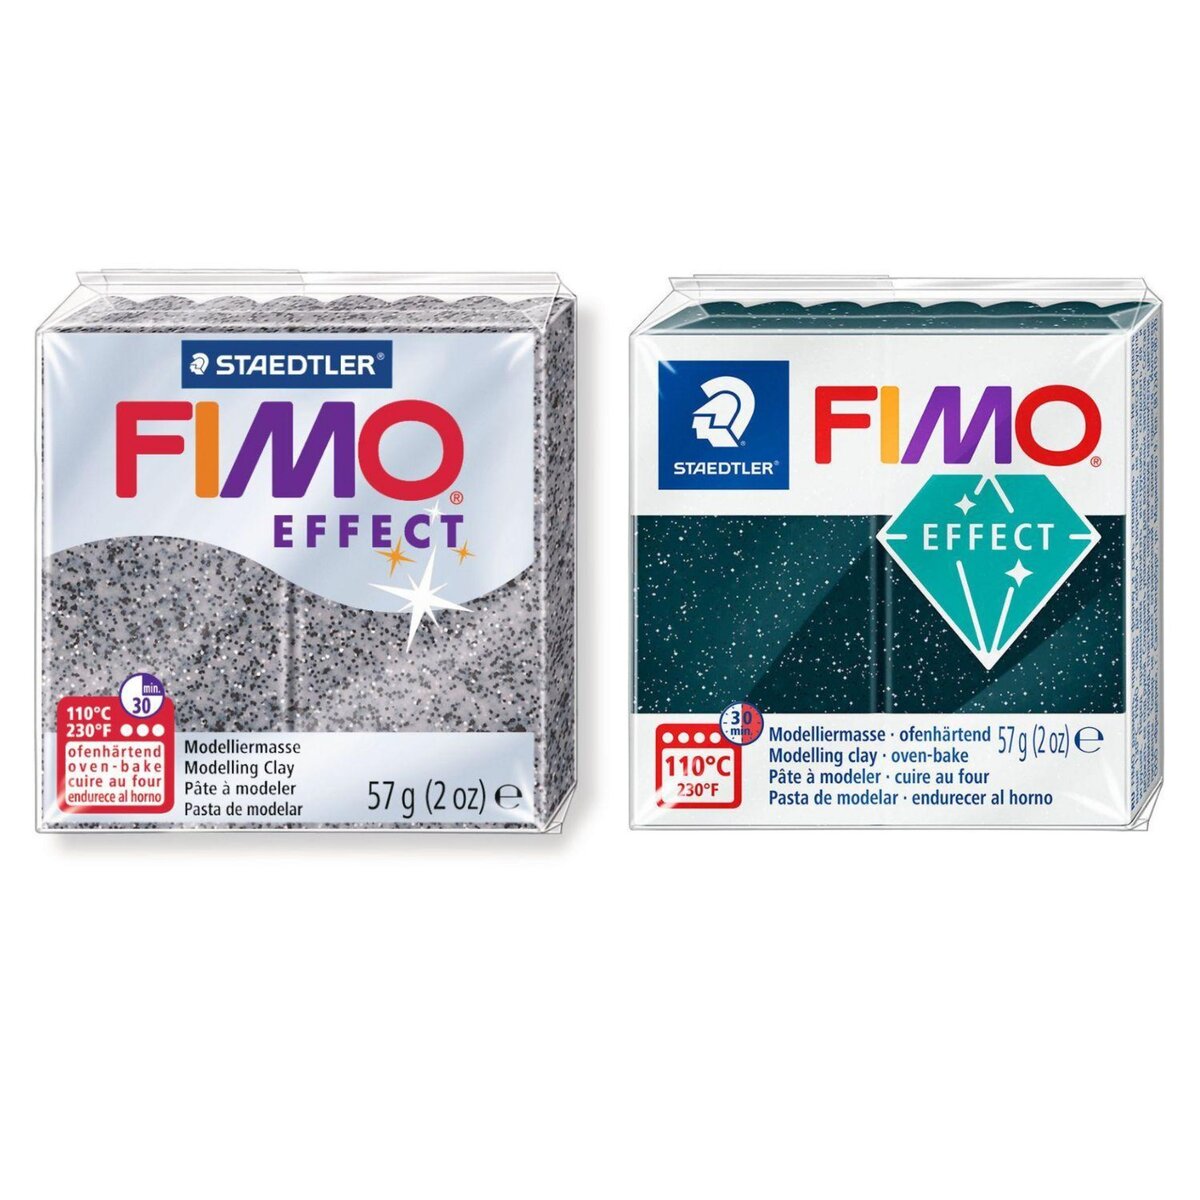 FIMO Pâte à cuire Fimo Soft de 57 g coloris Blanc